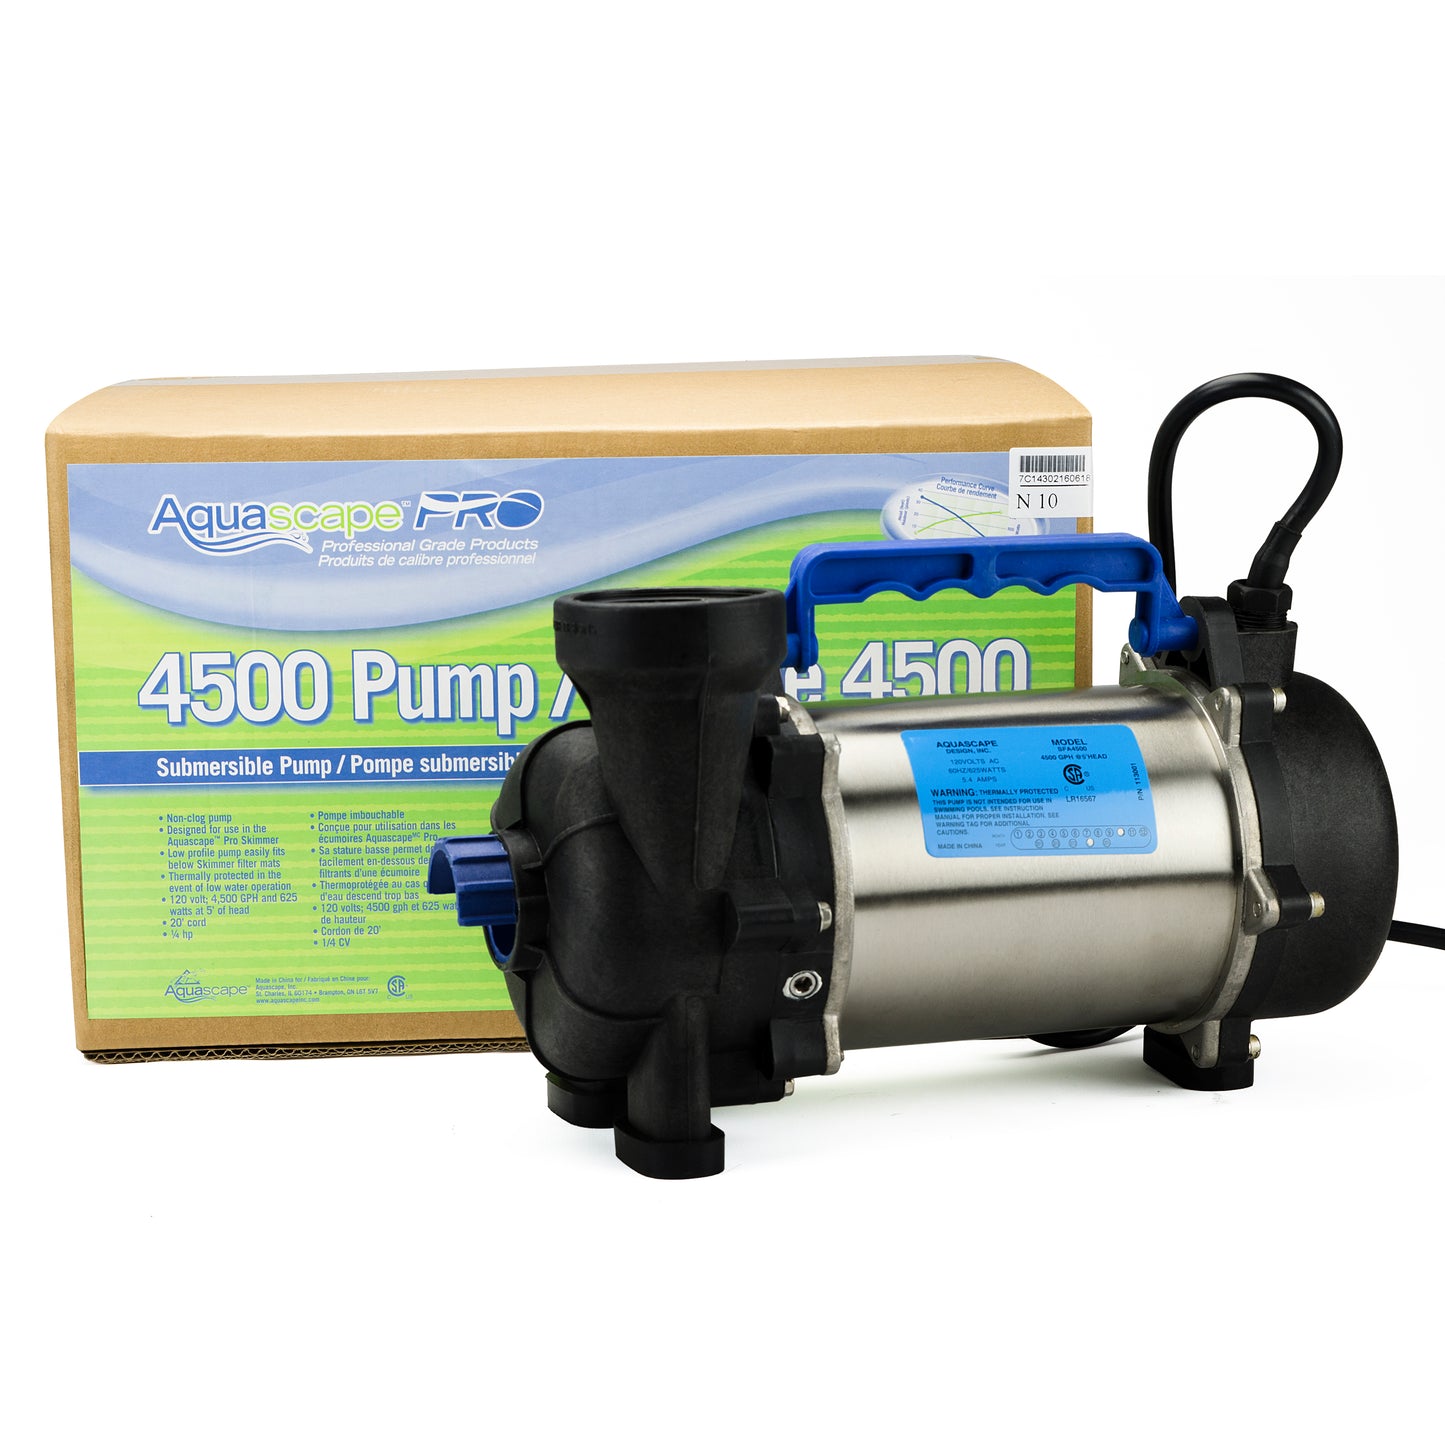 AquascapePRO 4500 Pond Pump